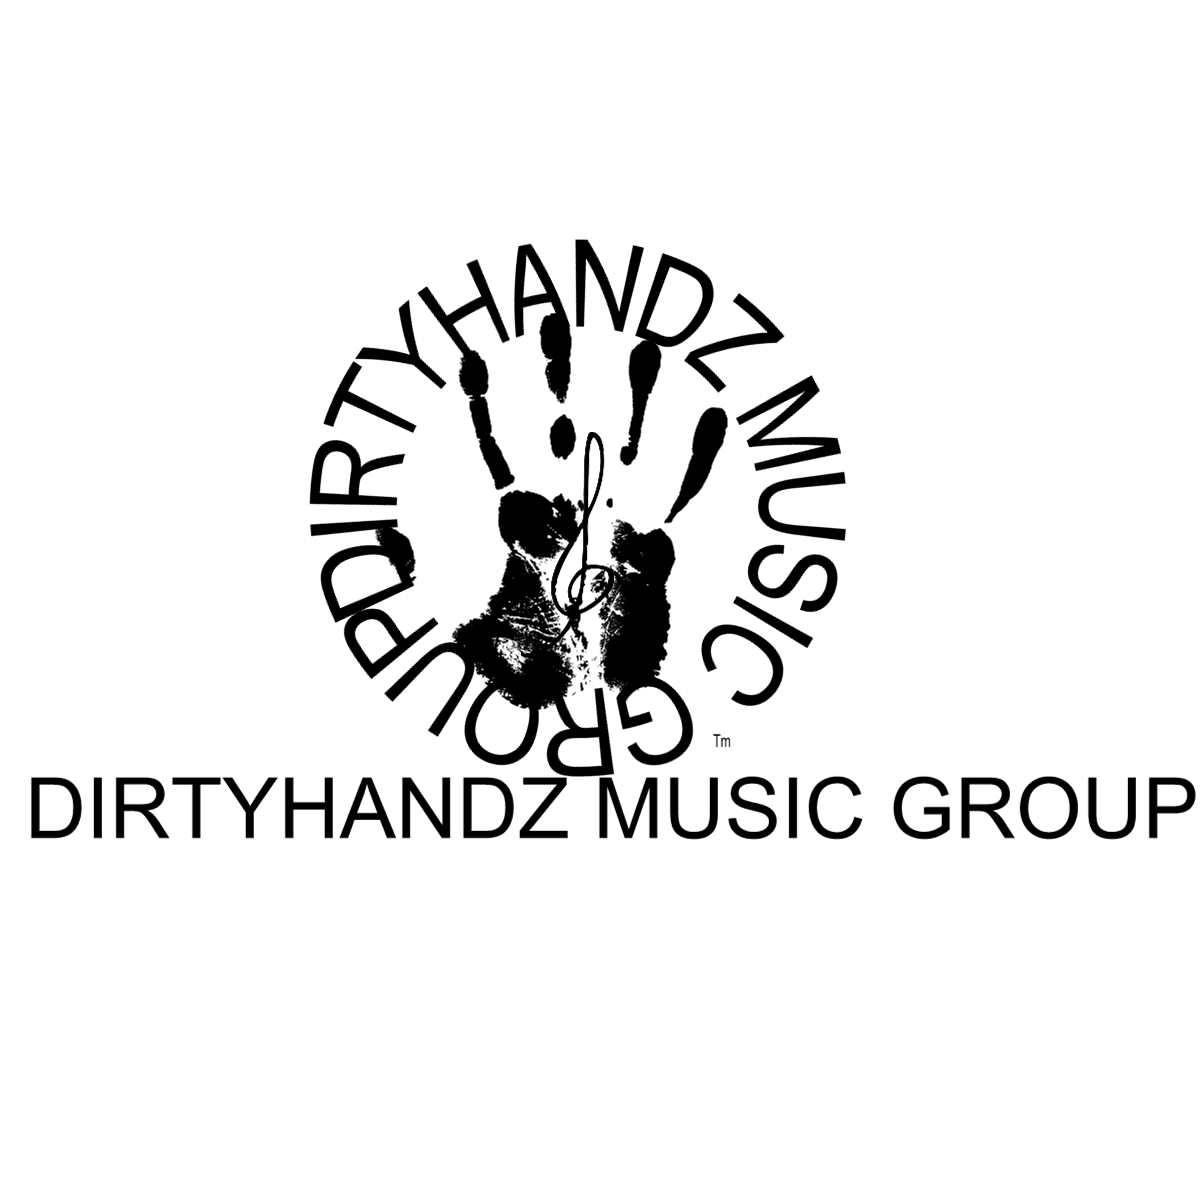 The Dirtyhandz Music Group